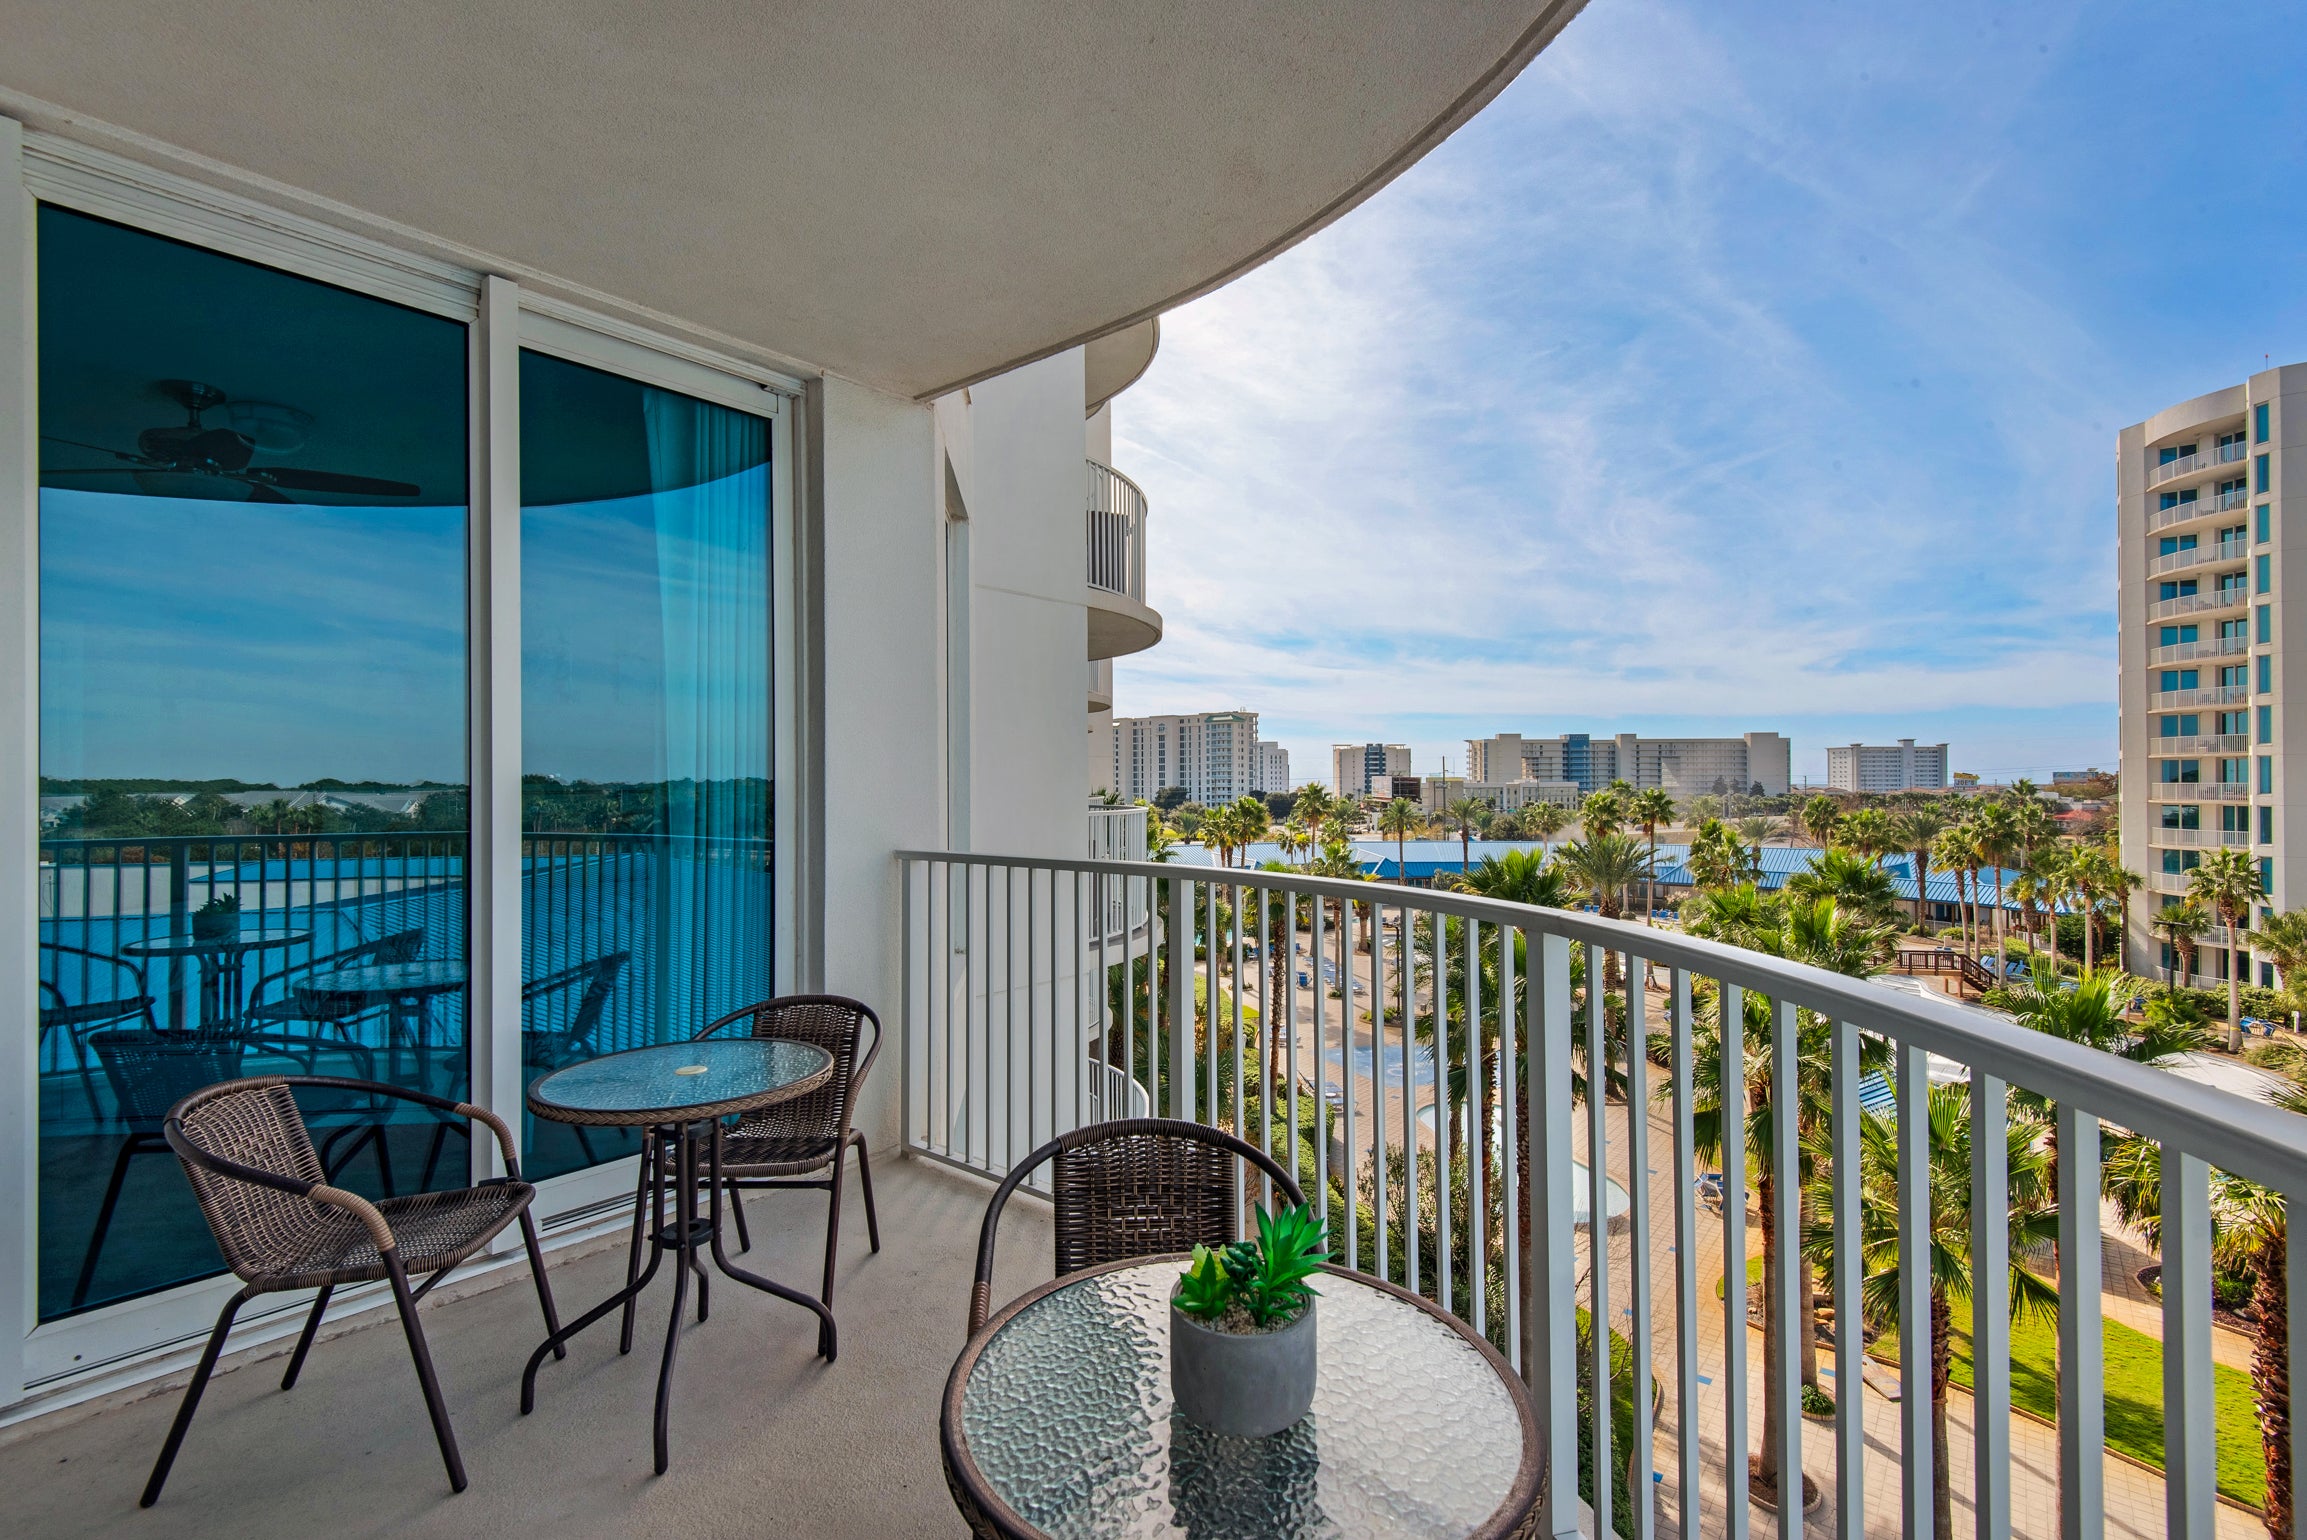 Palms Resort #1503 balcony